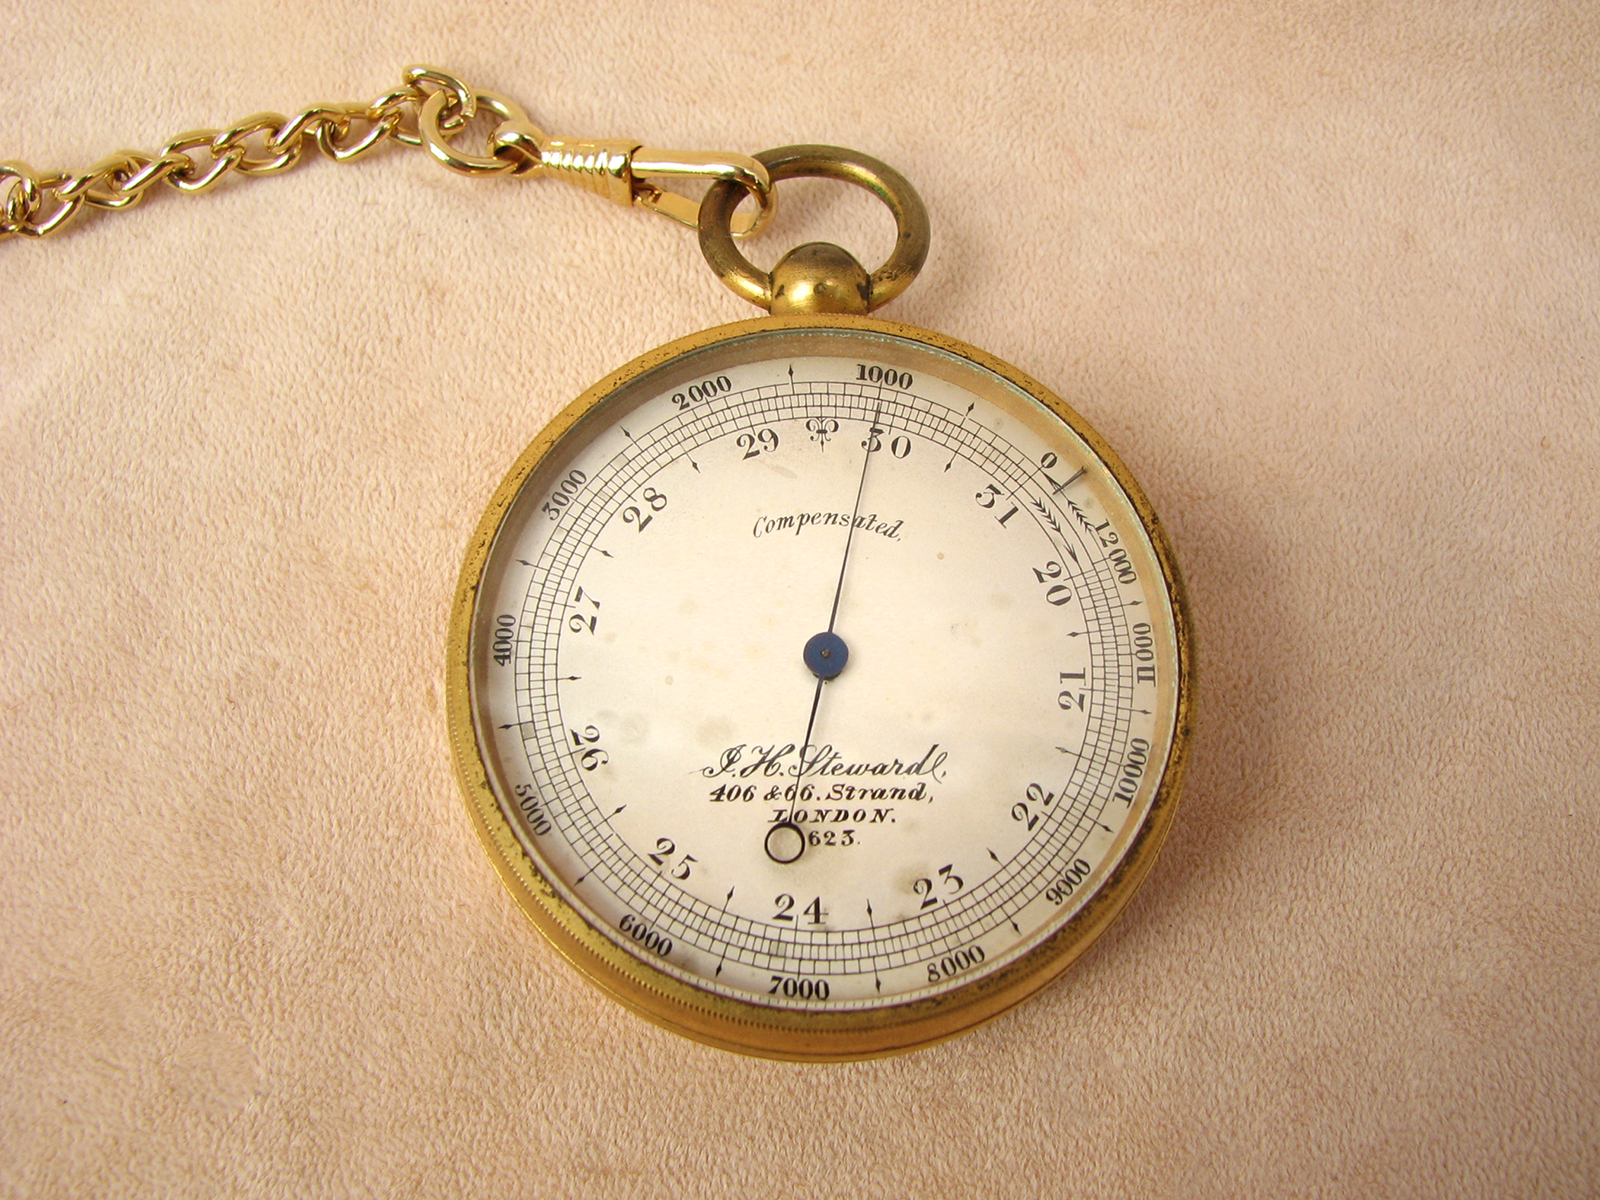 J. H. Steward pocket barometer/altimeter circa 1880